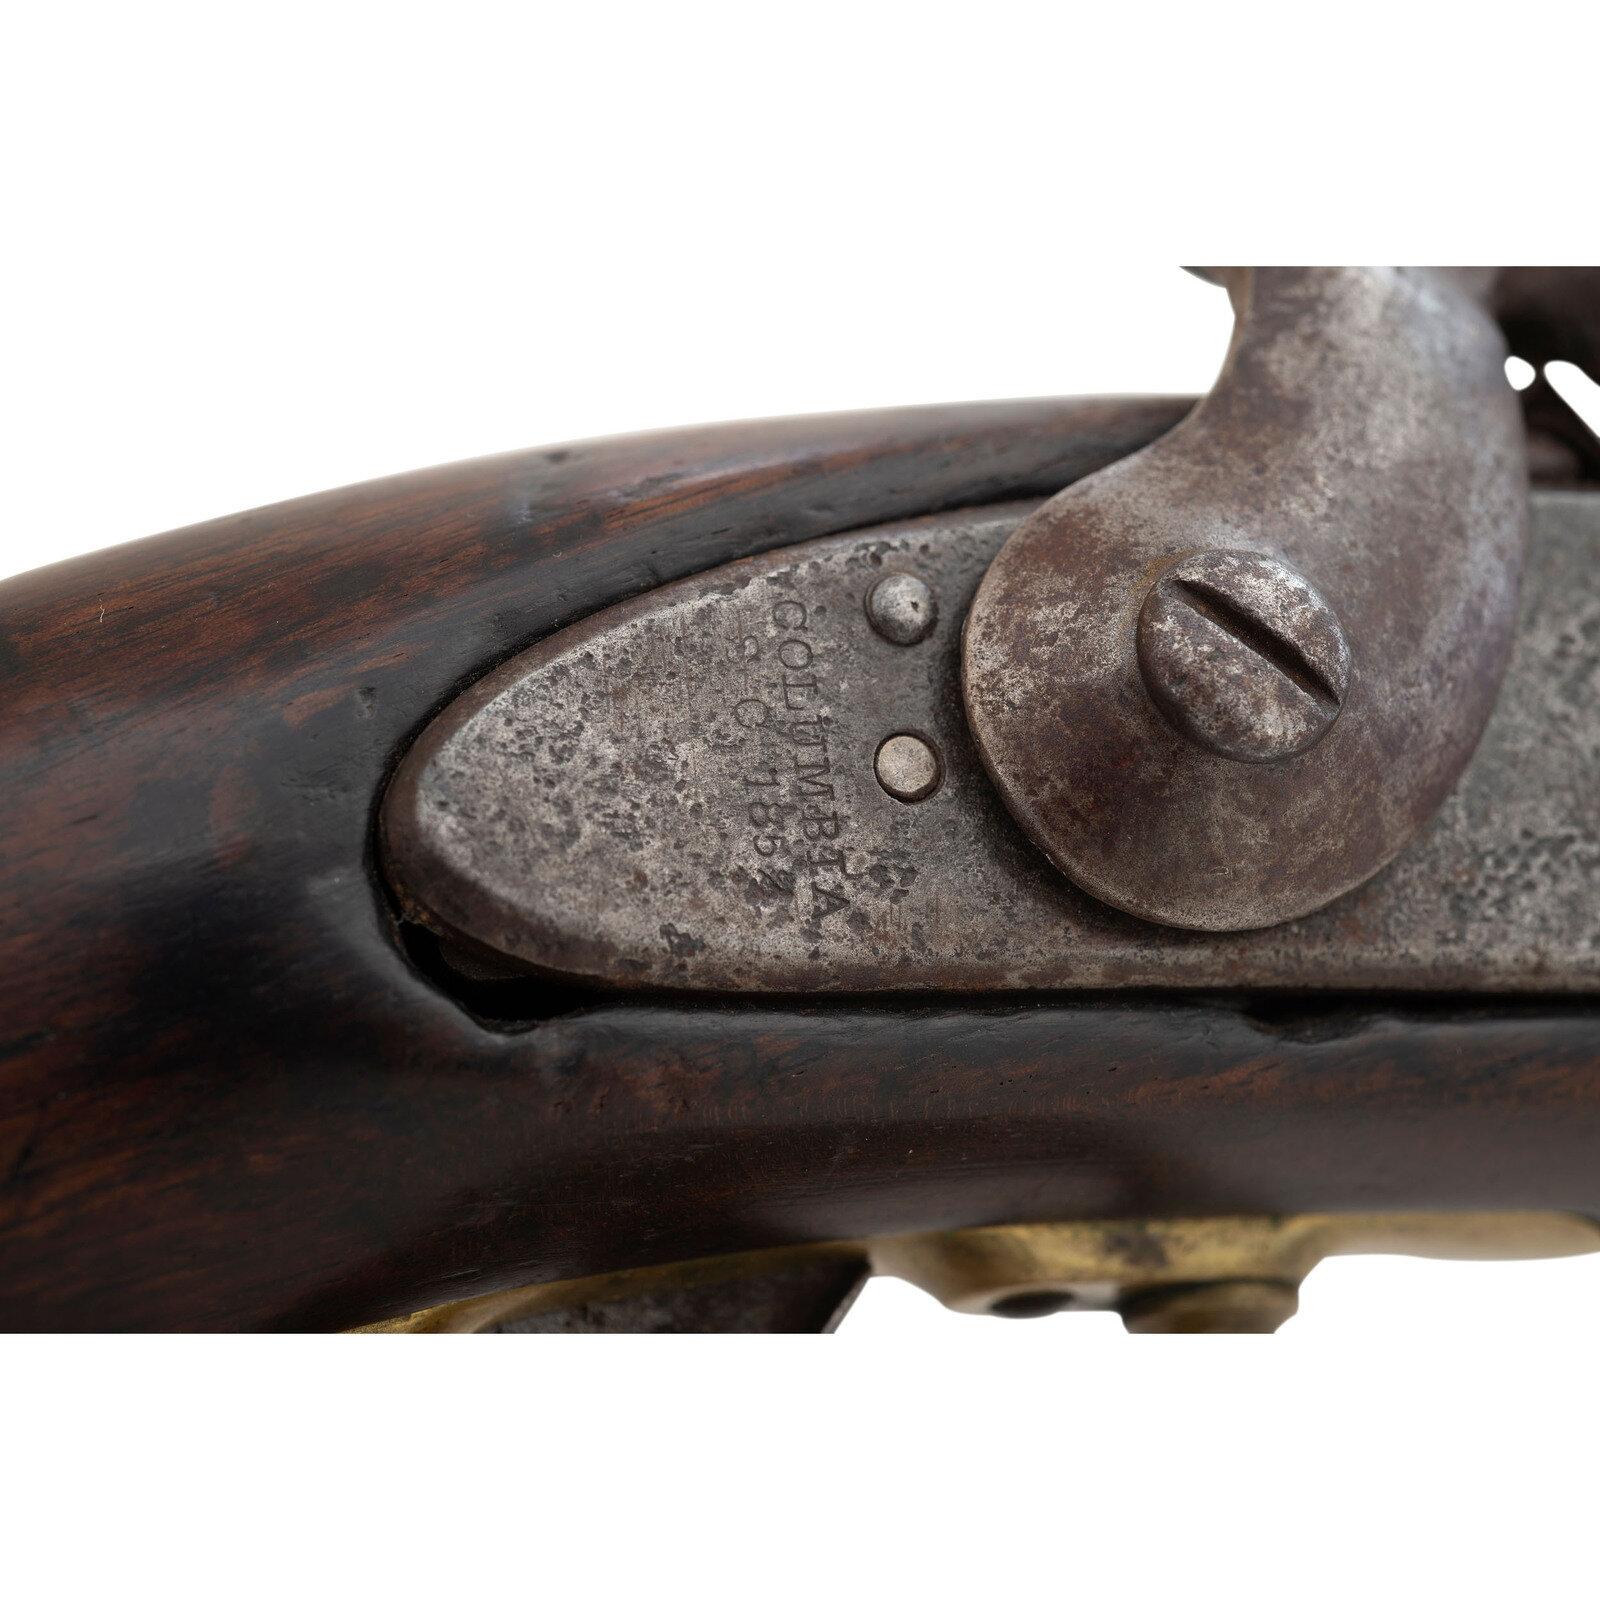 Rare Palmetto Armory Pistol by William Glaze